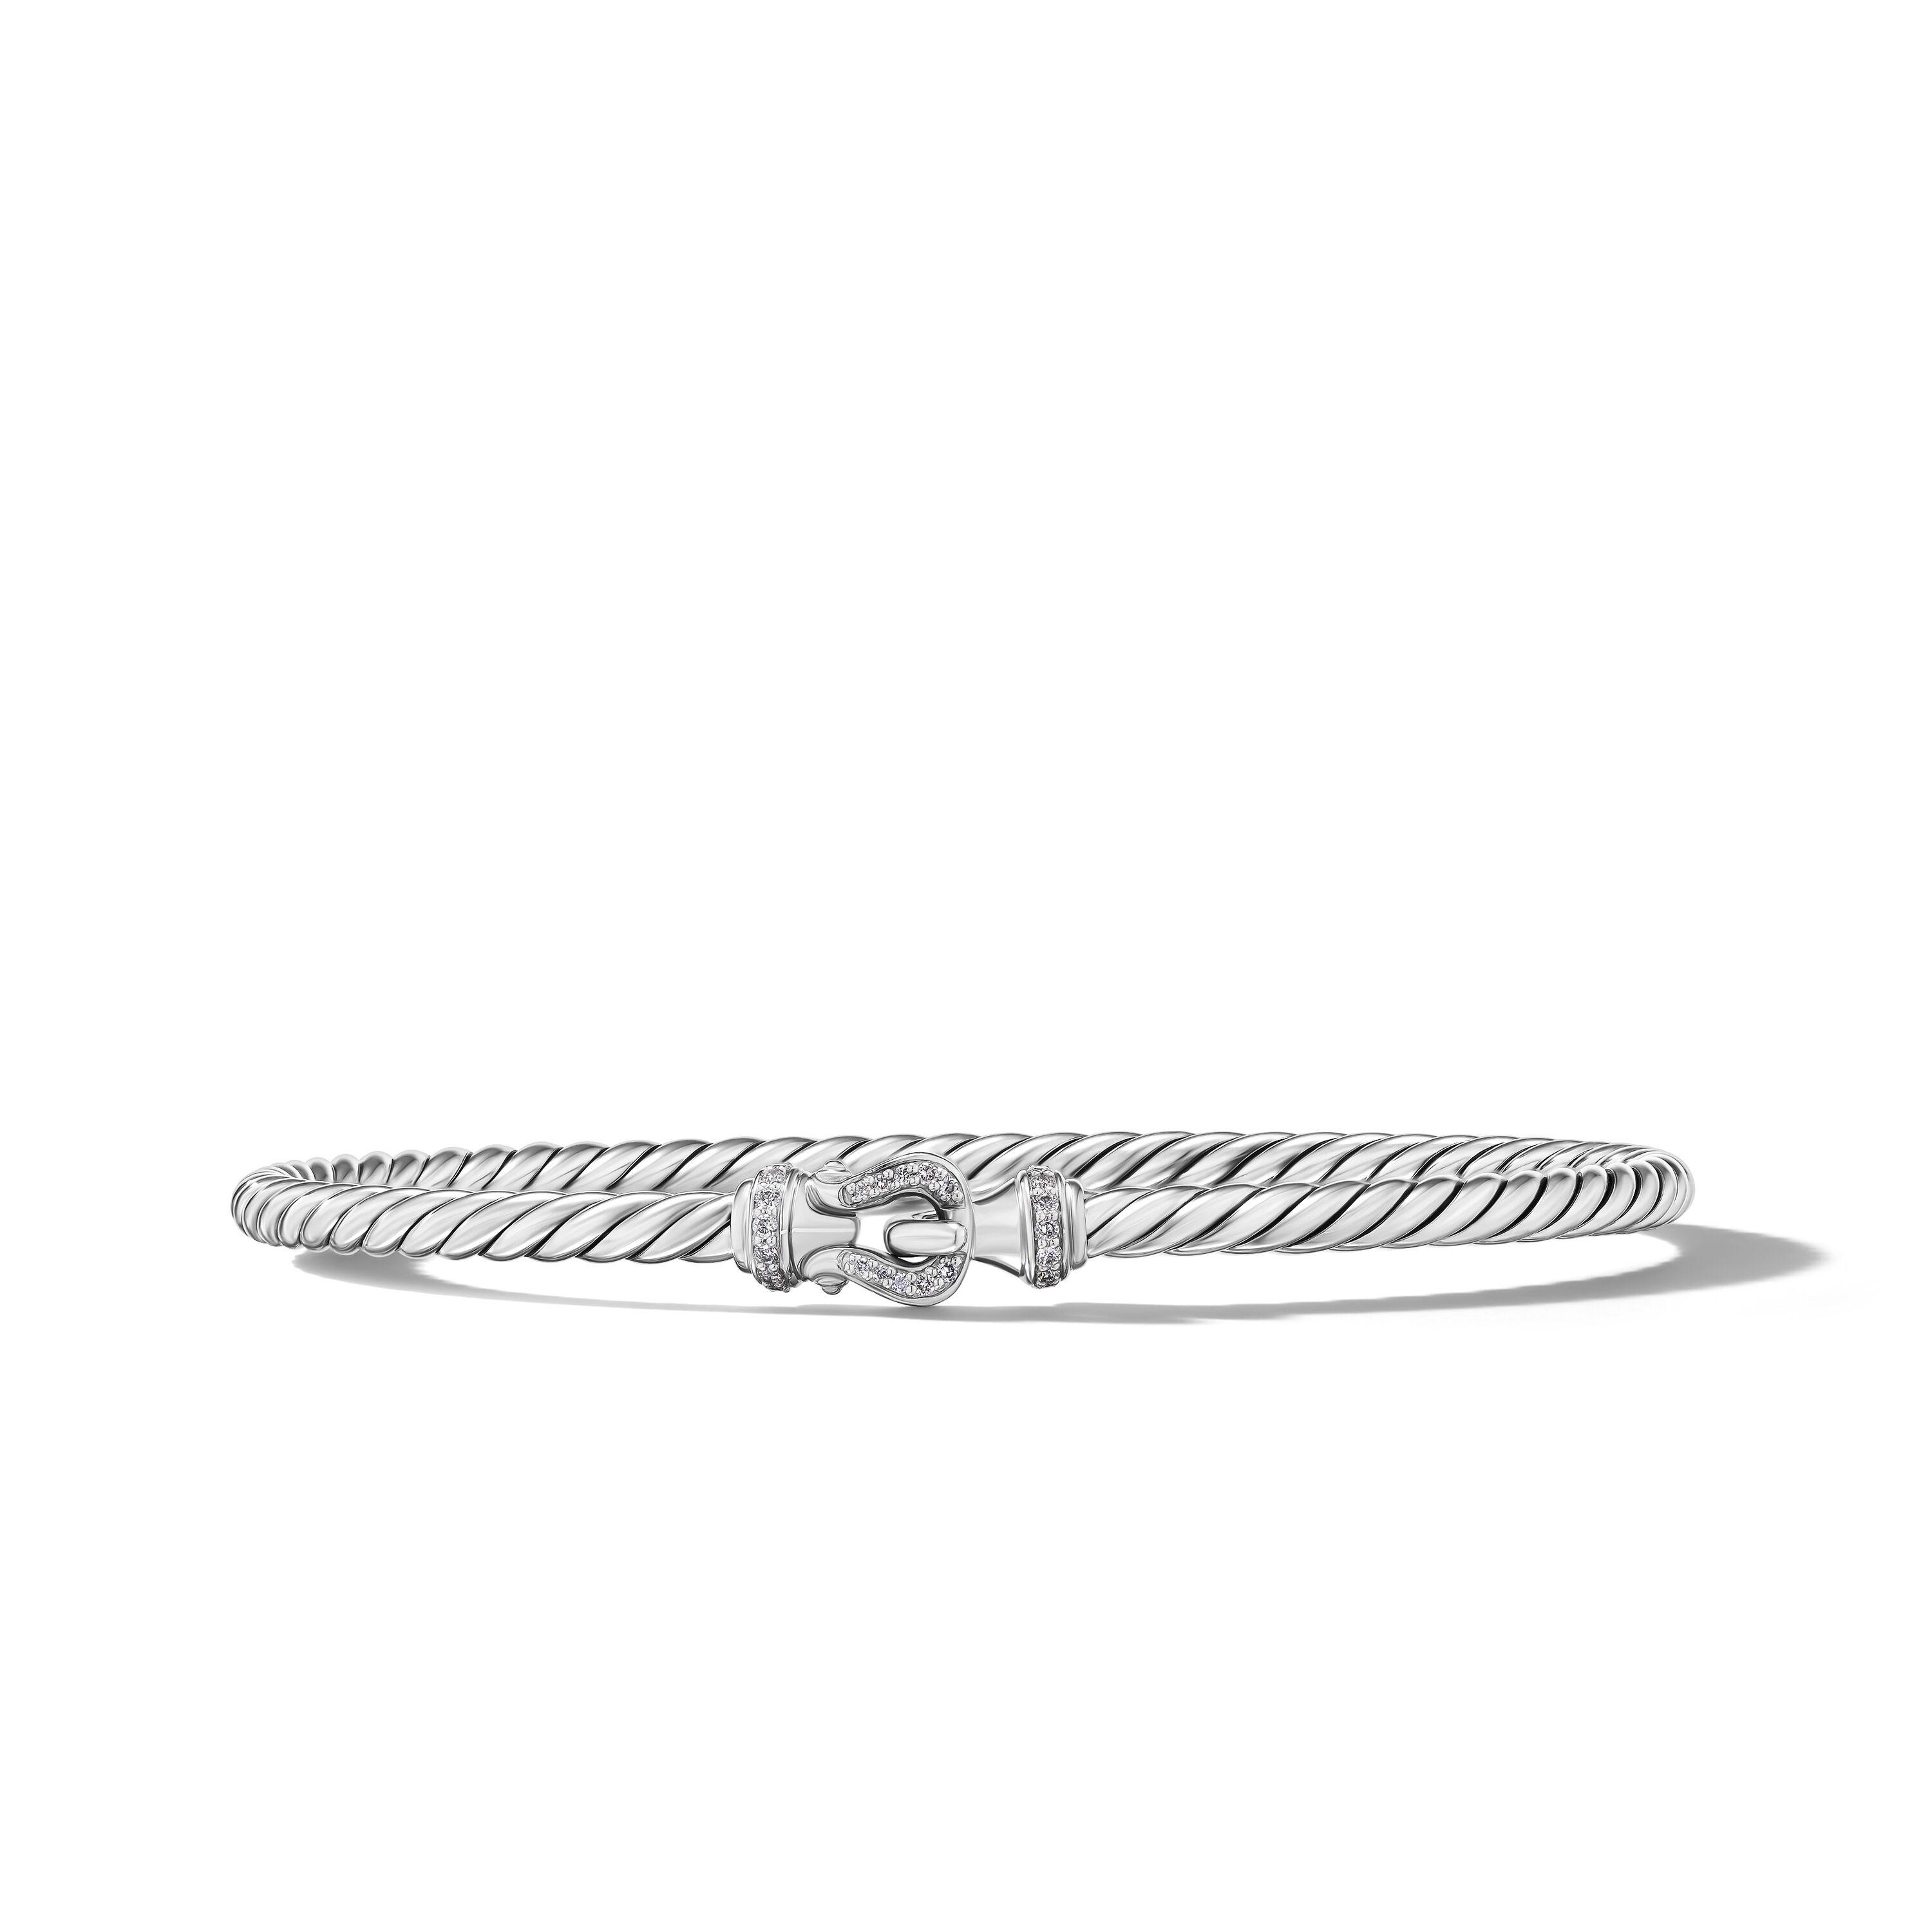 David Yurman 3mm Buckle Bracelet in Sterling Silver with Diamonds, Size Medium 0